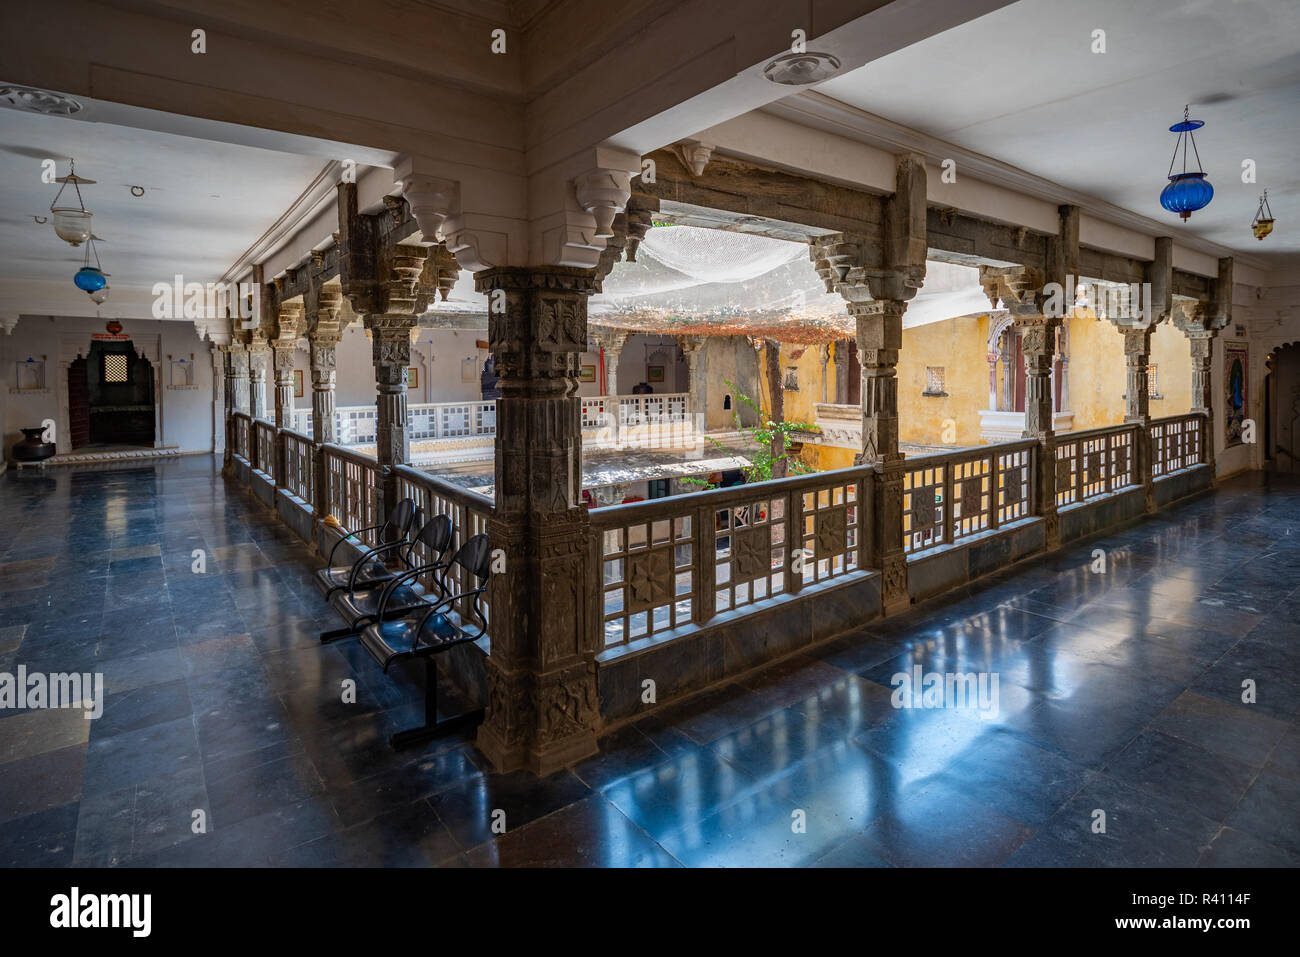 Views of an ornate Rajasthani palace courtyard in Bagore-ki-Haveli, Udaipur, India Stock Photo